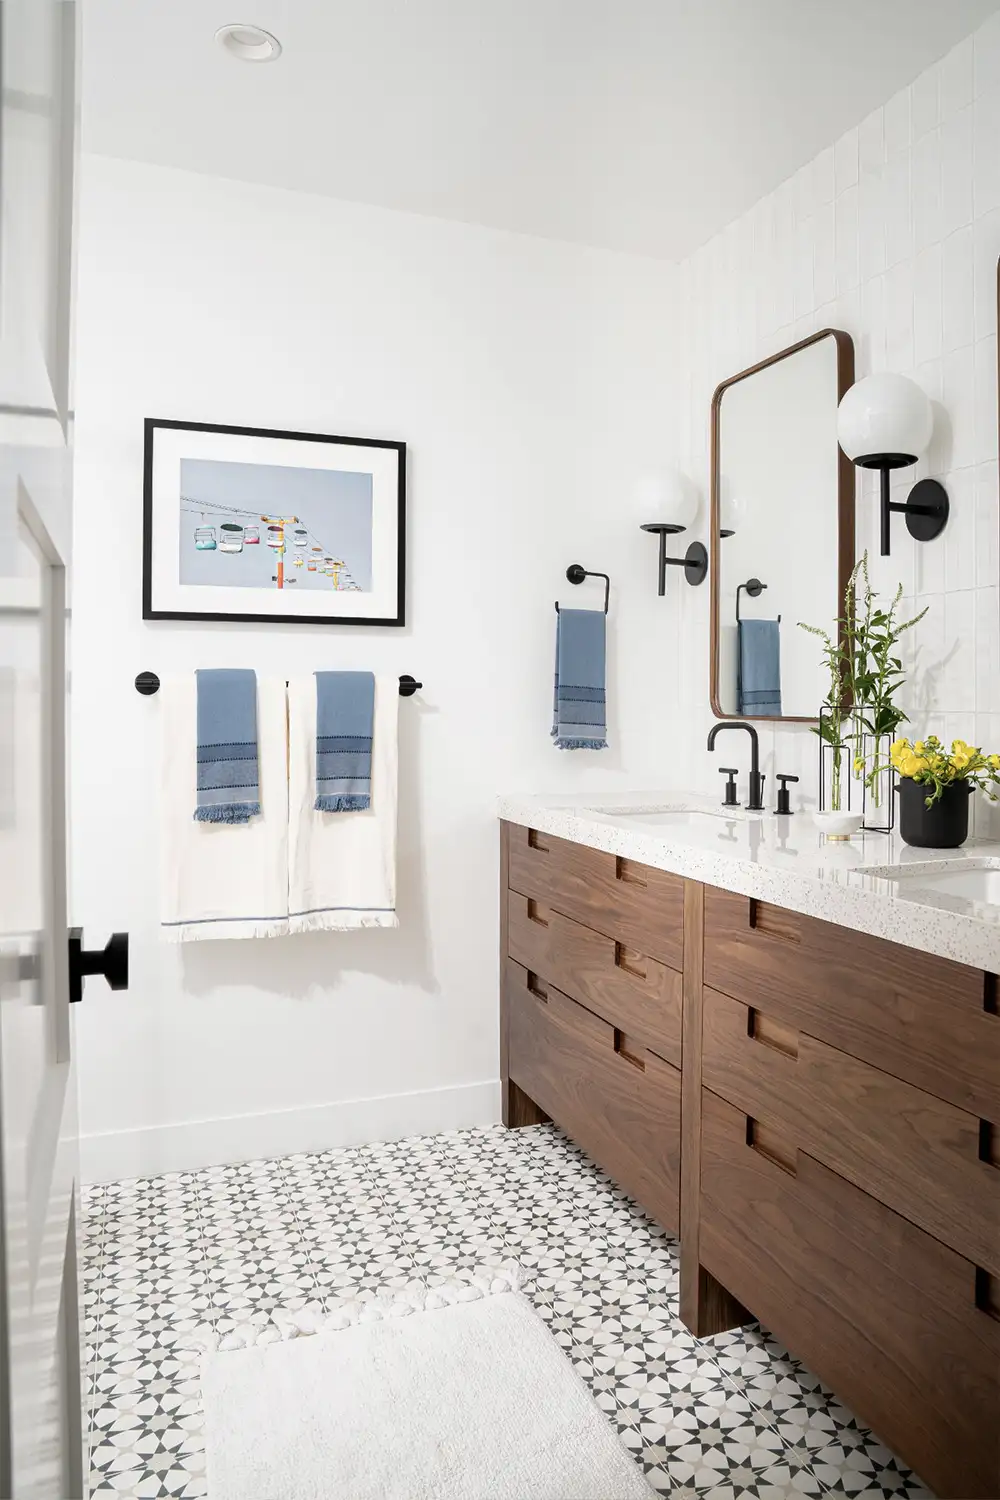 Villa Park Bathroom Design with patterned tile, wood vanity and black fixtures